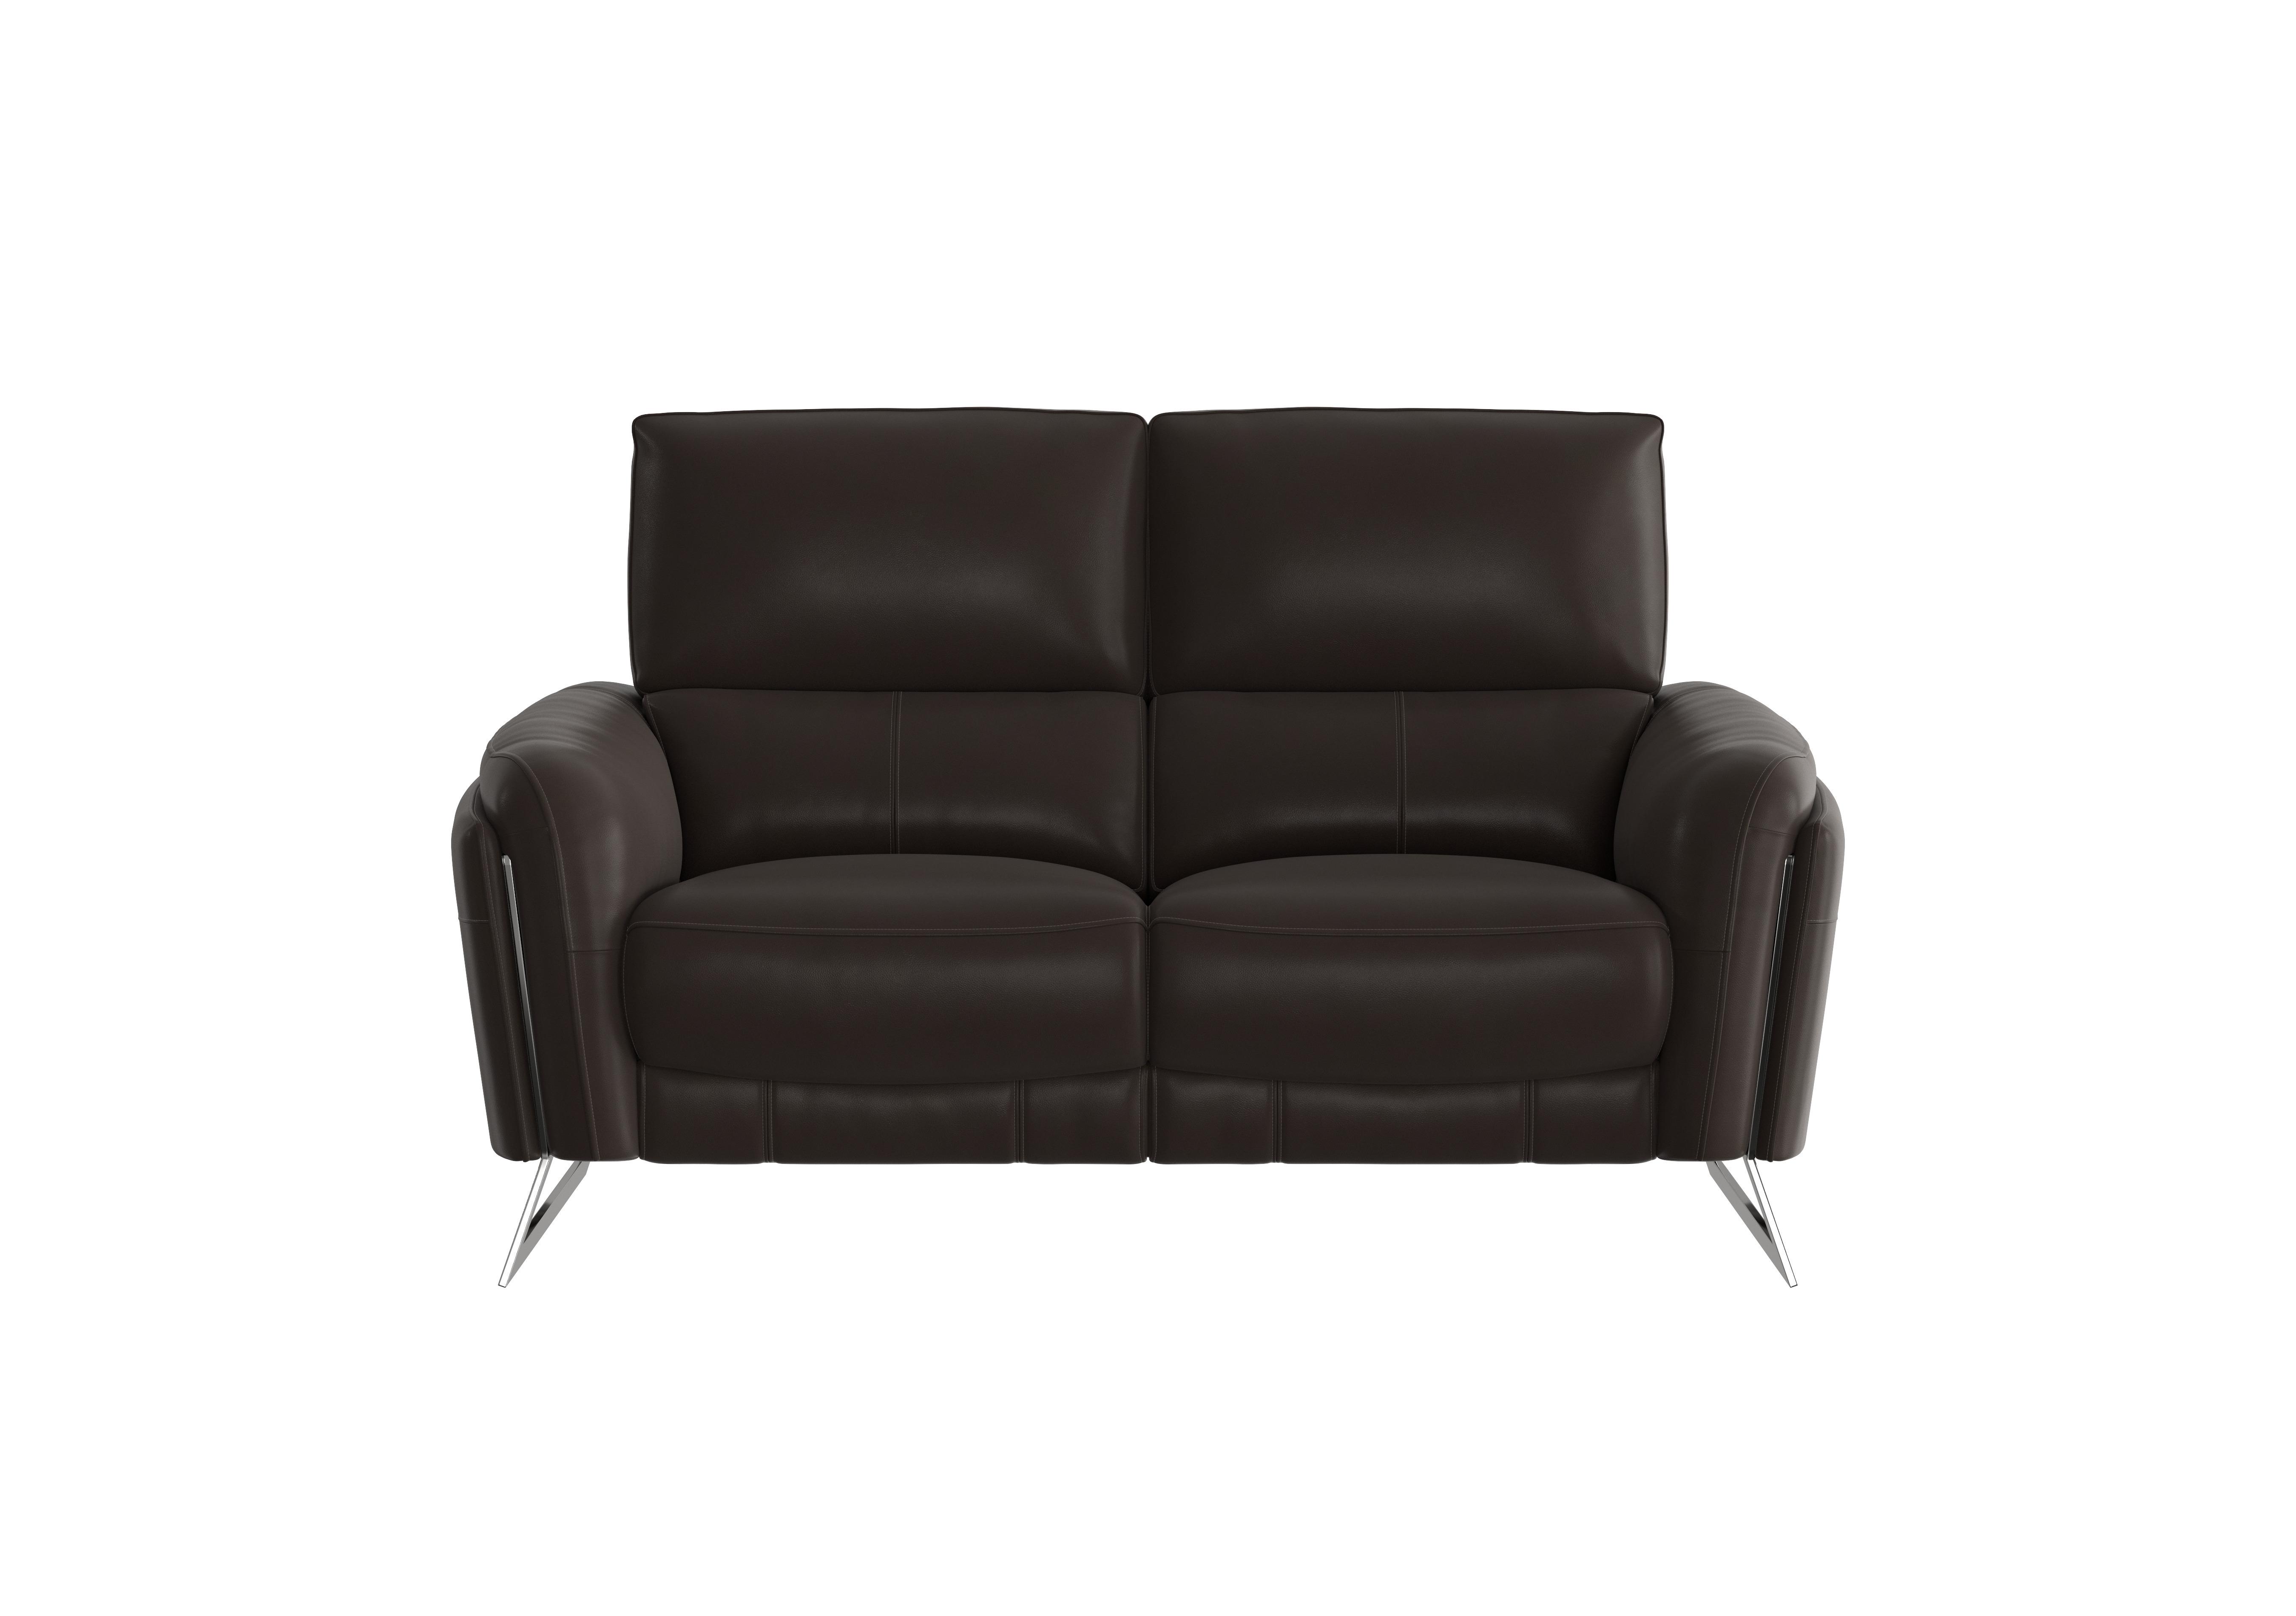 Amarilla 2 Seater Leather Sofa in Bv-1748 Dark Chocolate on Furniture Village